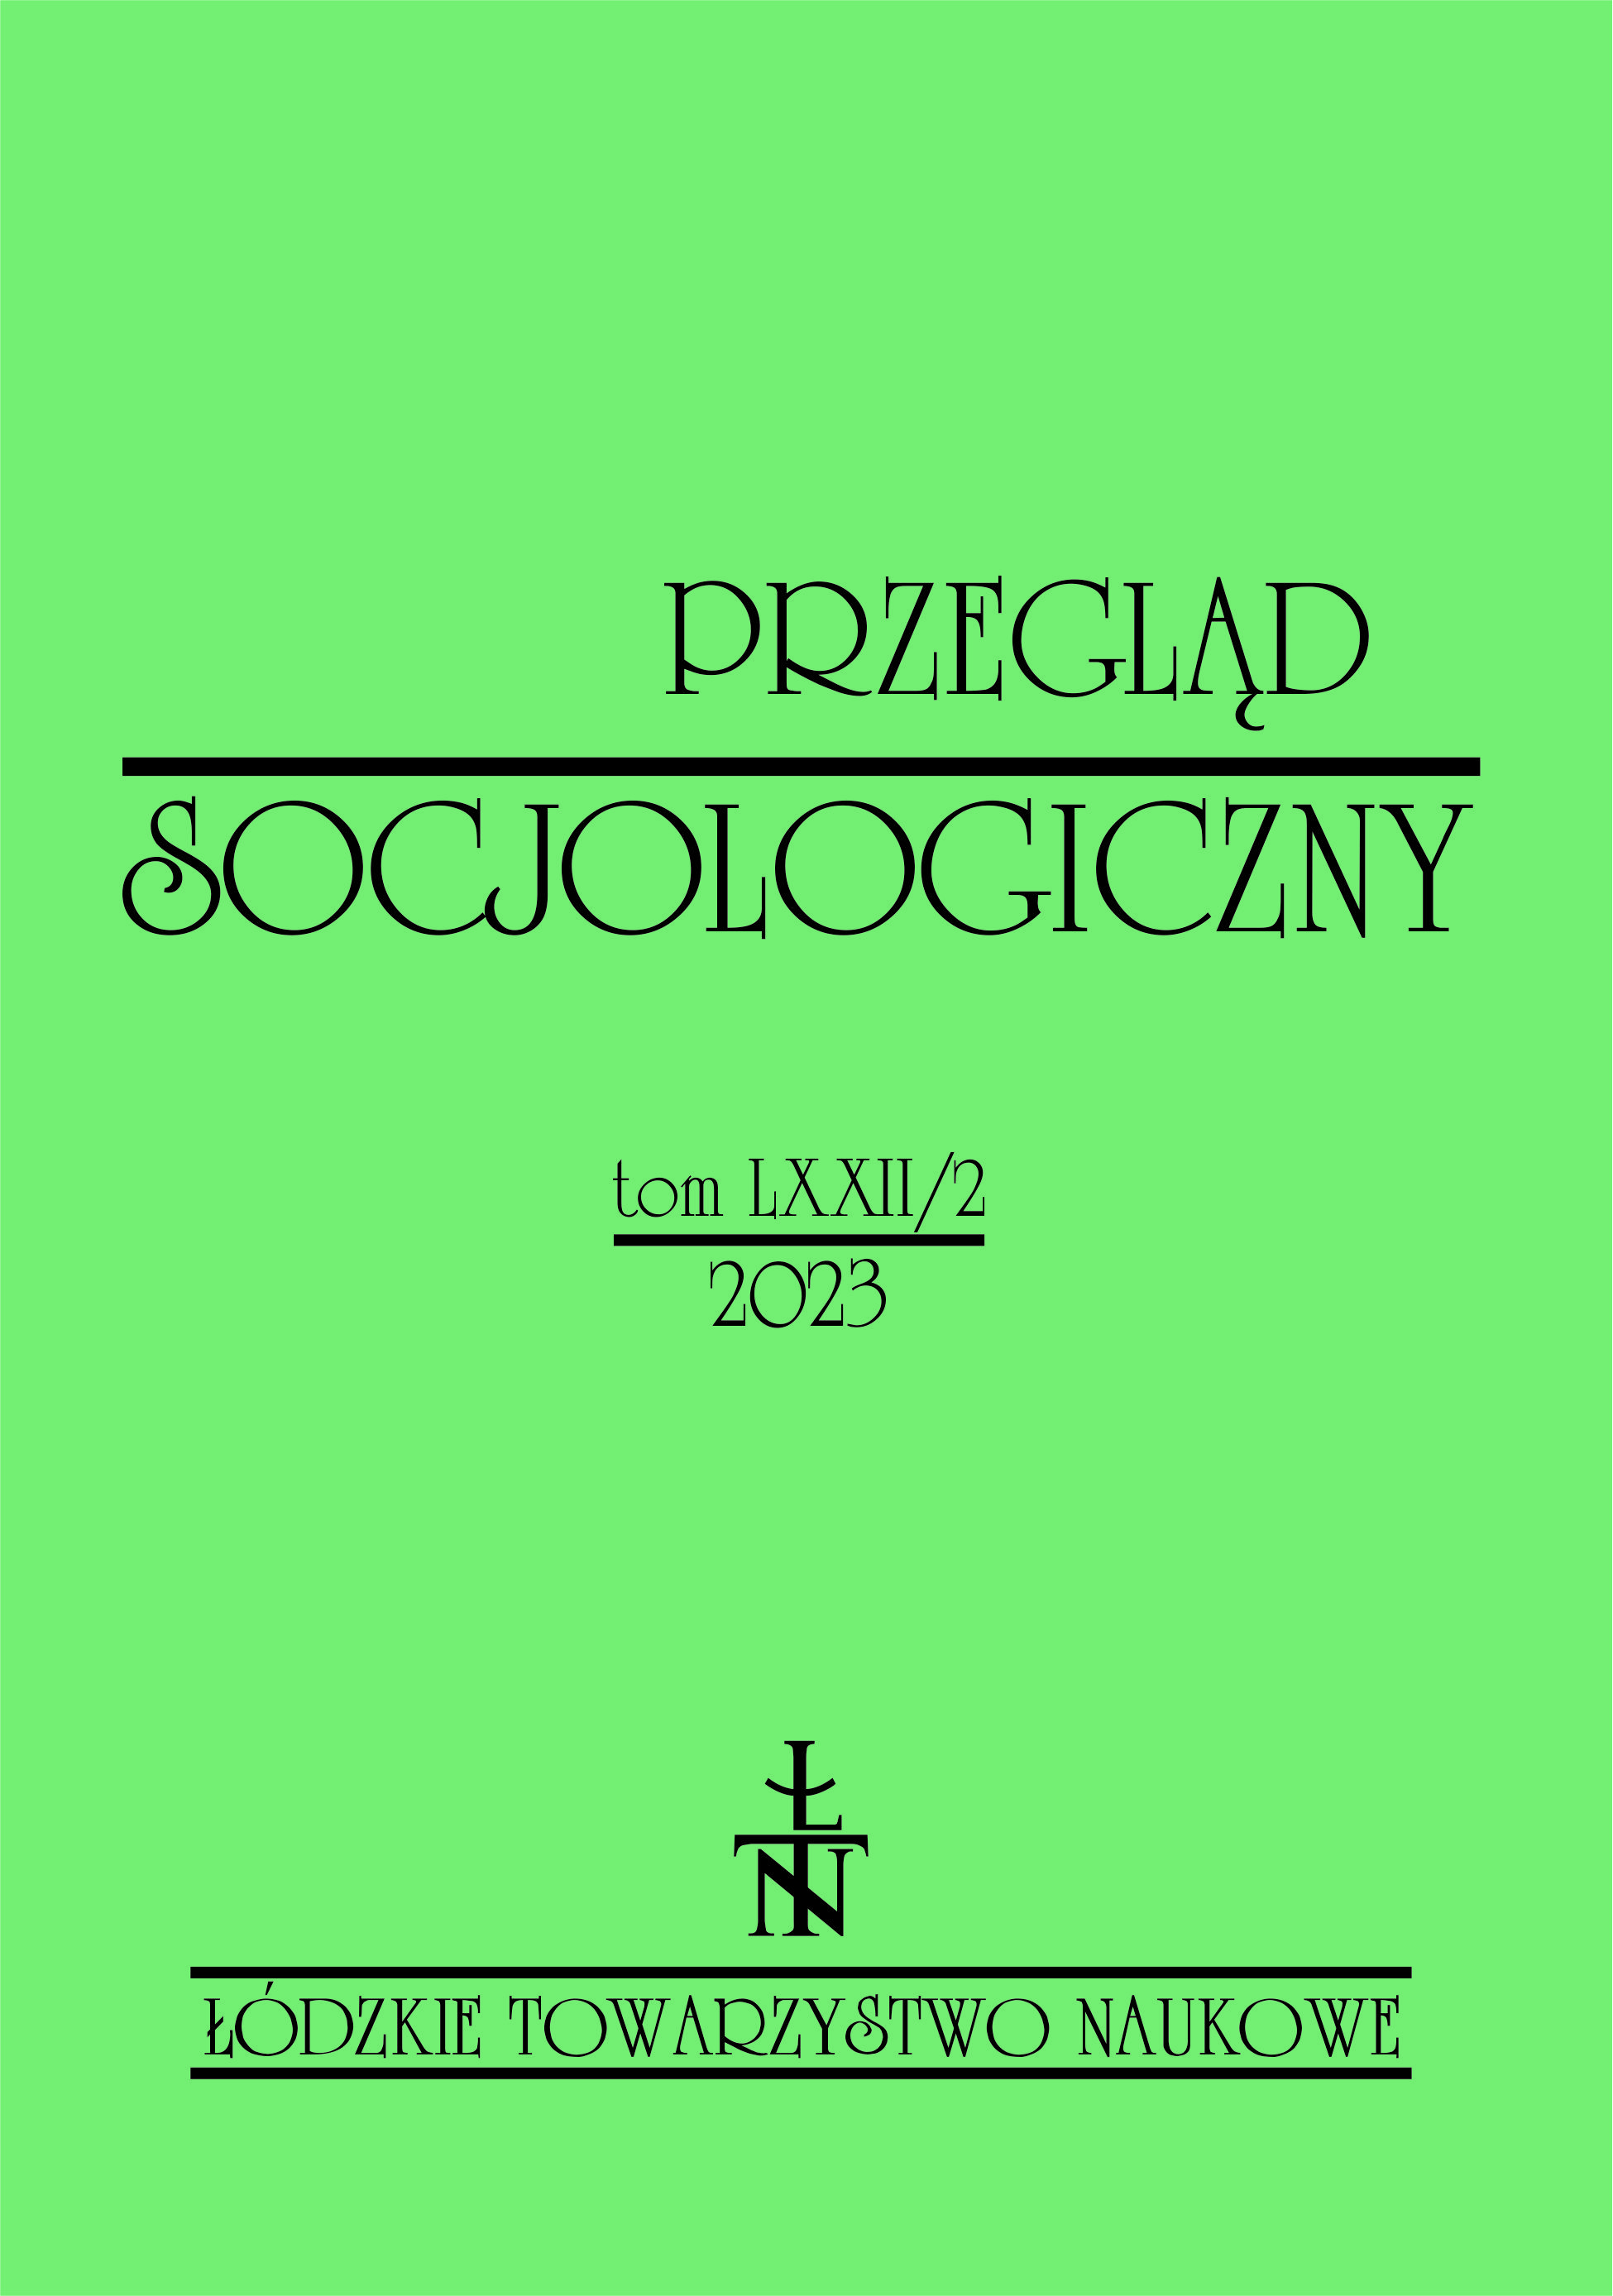 DISCURSIVE PSYCHOLOGY Cover Image